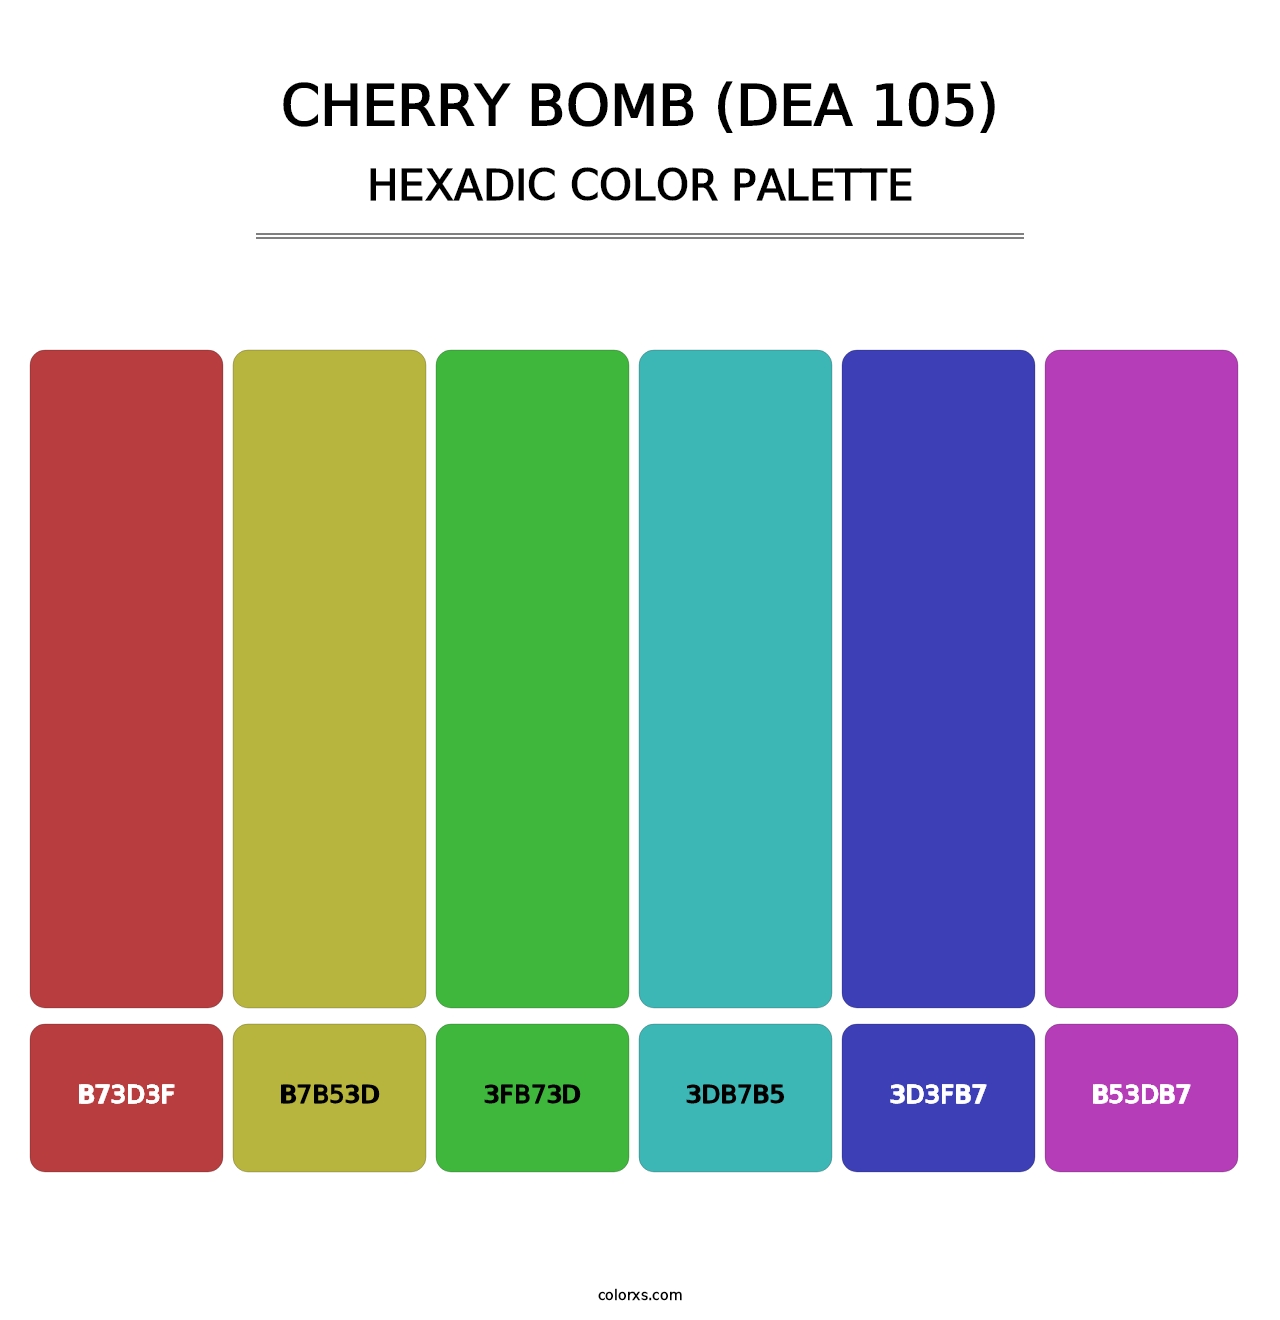 Cherry Bomb (DEA 105) - Hexadic Color Palette